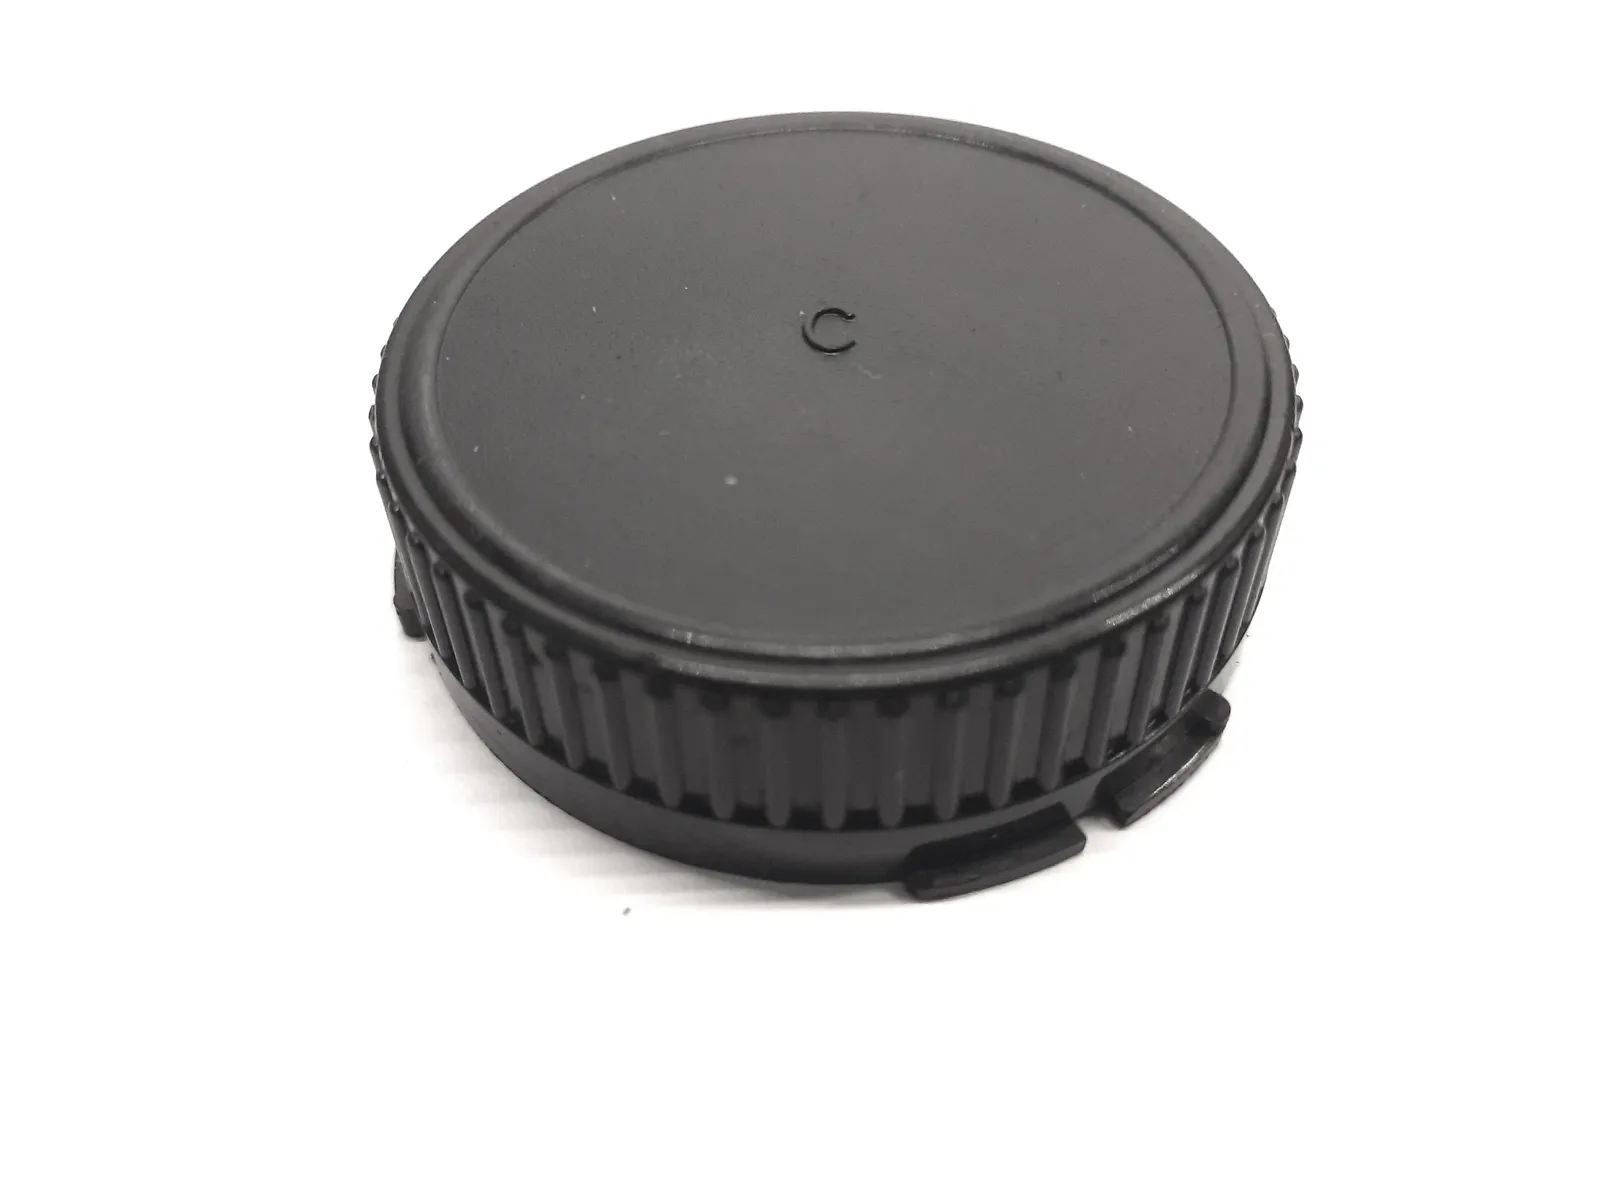 Unbranded - Black Plastic Rear Lens Cap - Fits Canon AE-1 Camera Lens